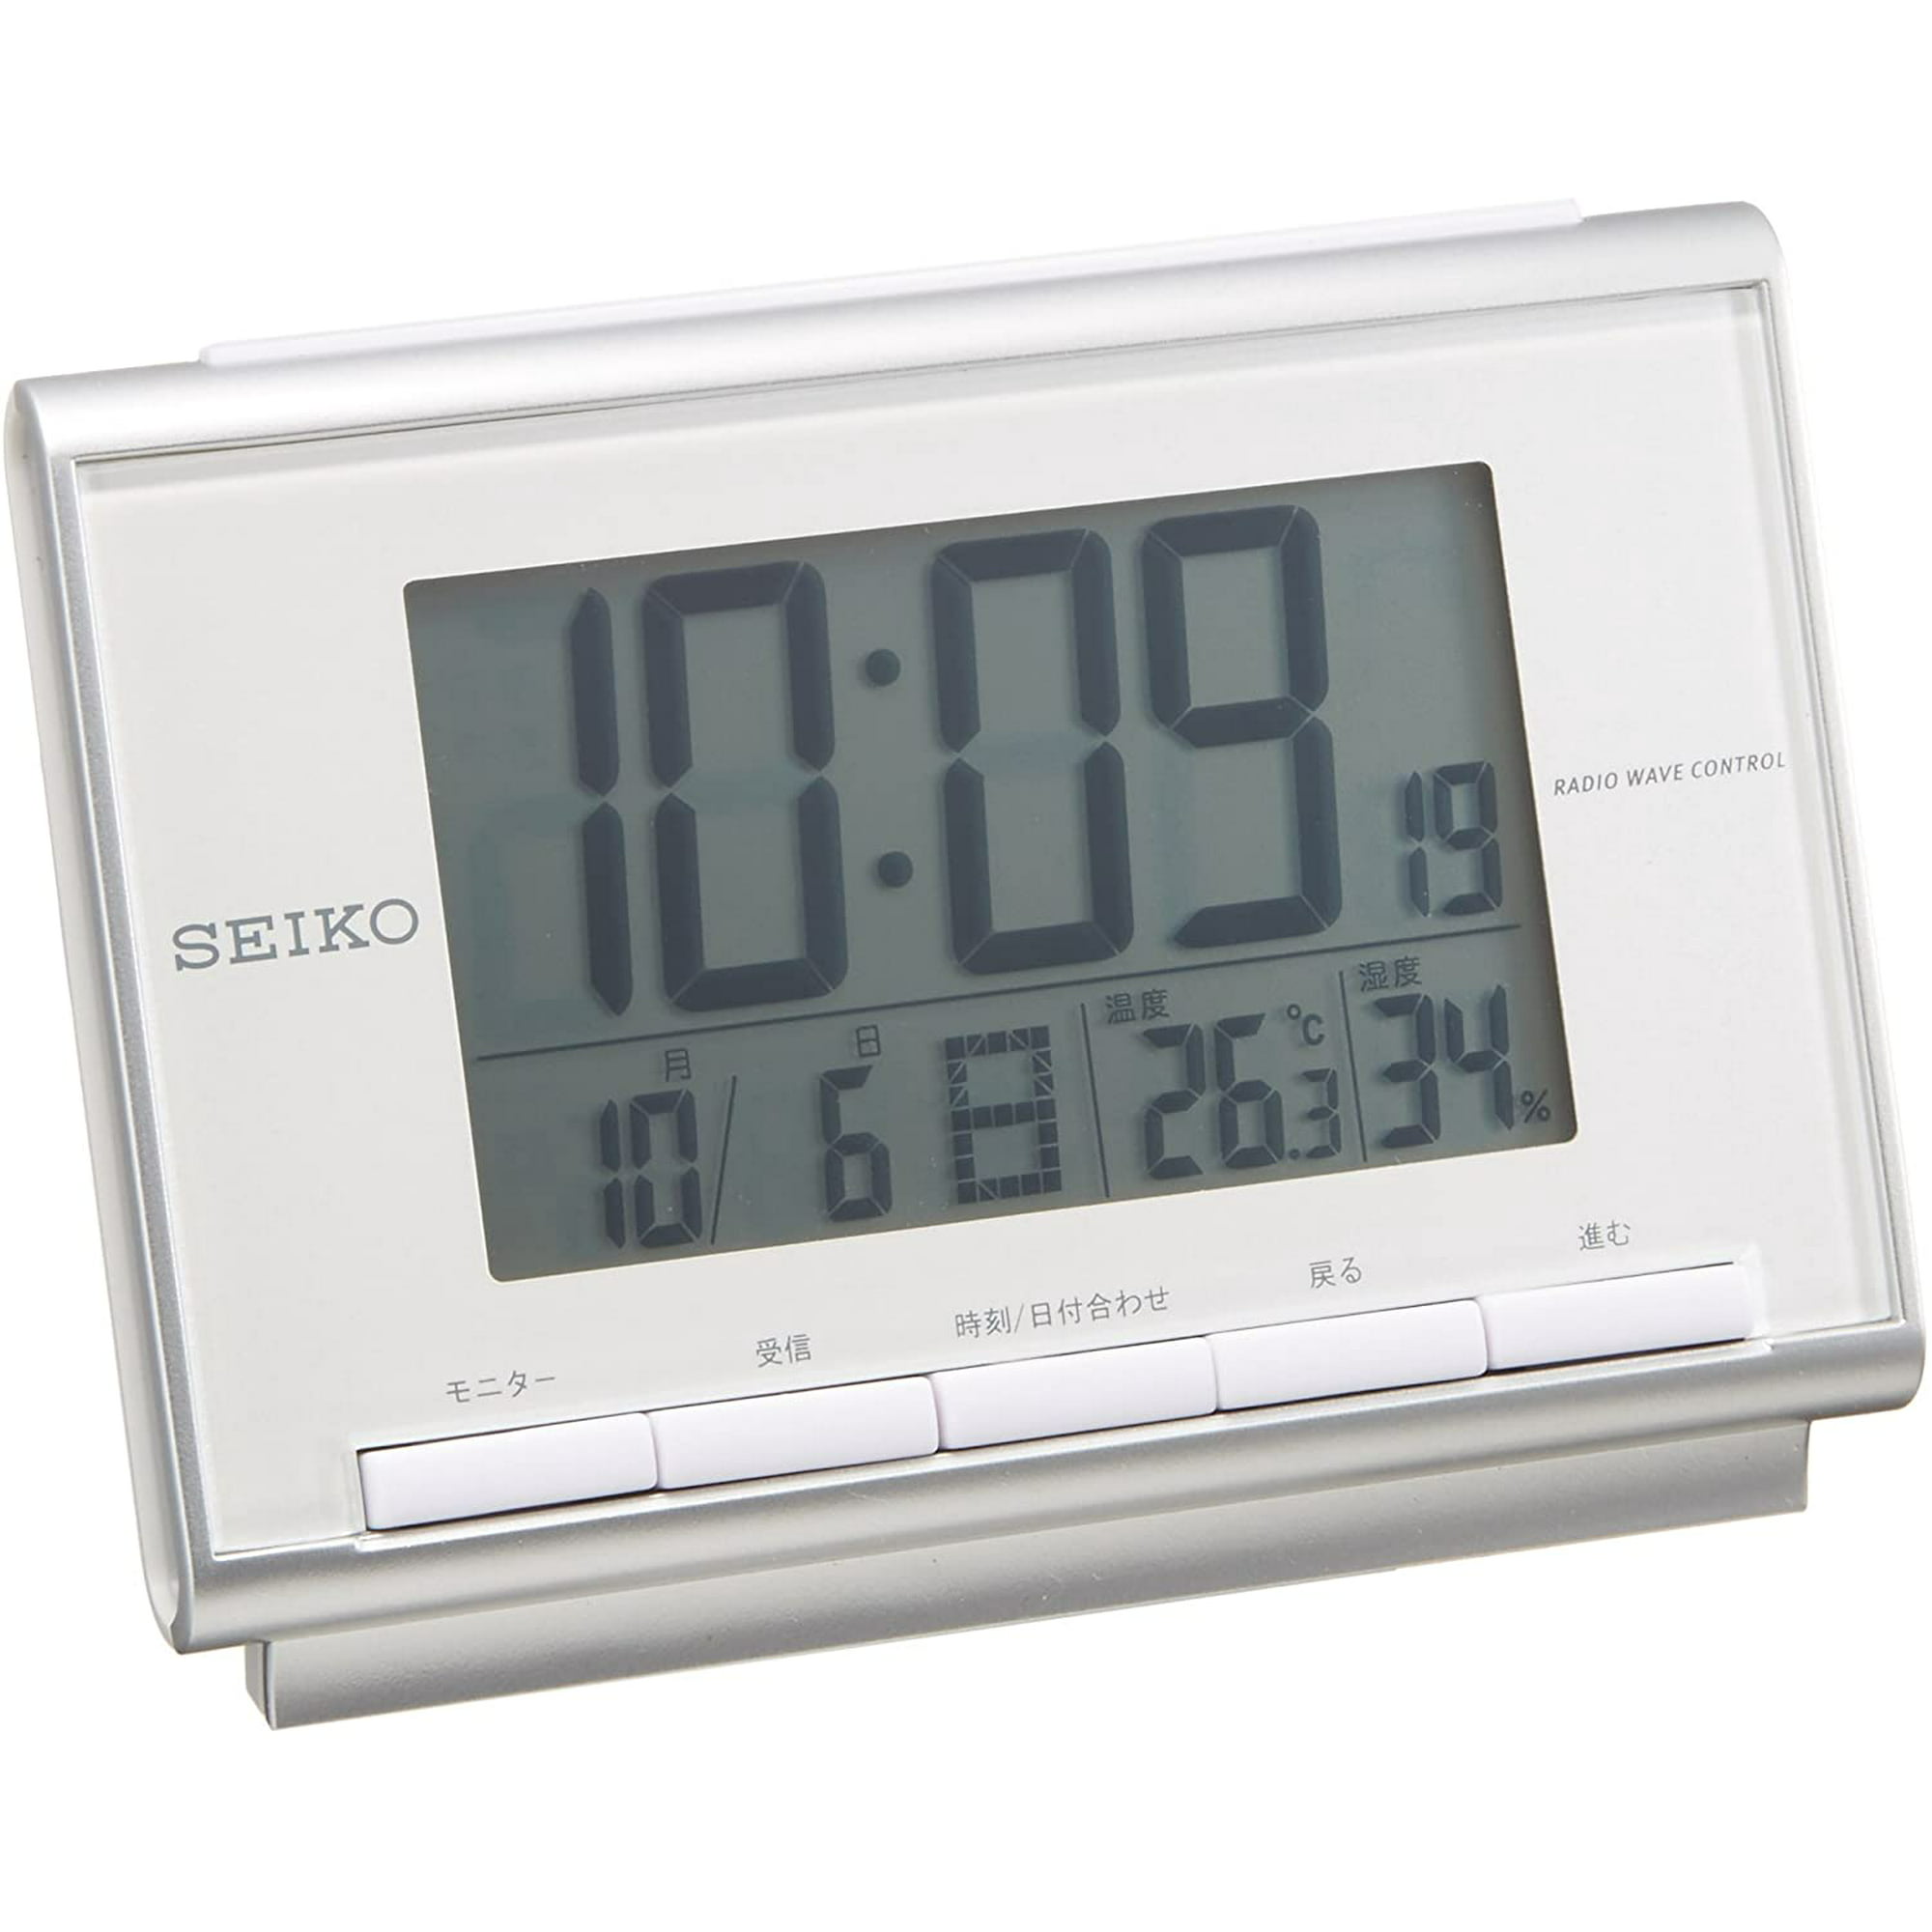 Clock Seiko (Seiko) Alarm Clock Digital Radio Clock SQ698S | Walmart Canada